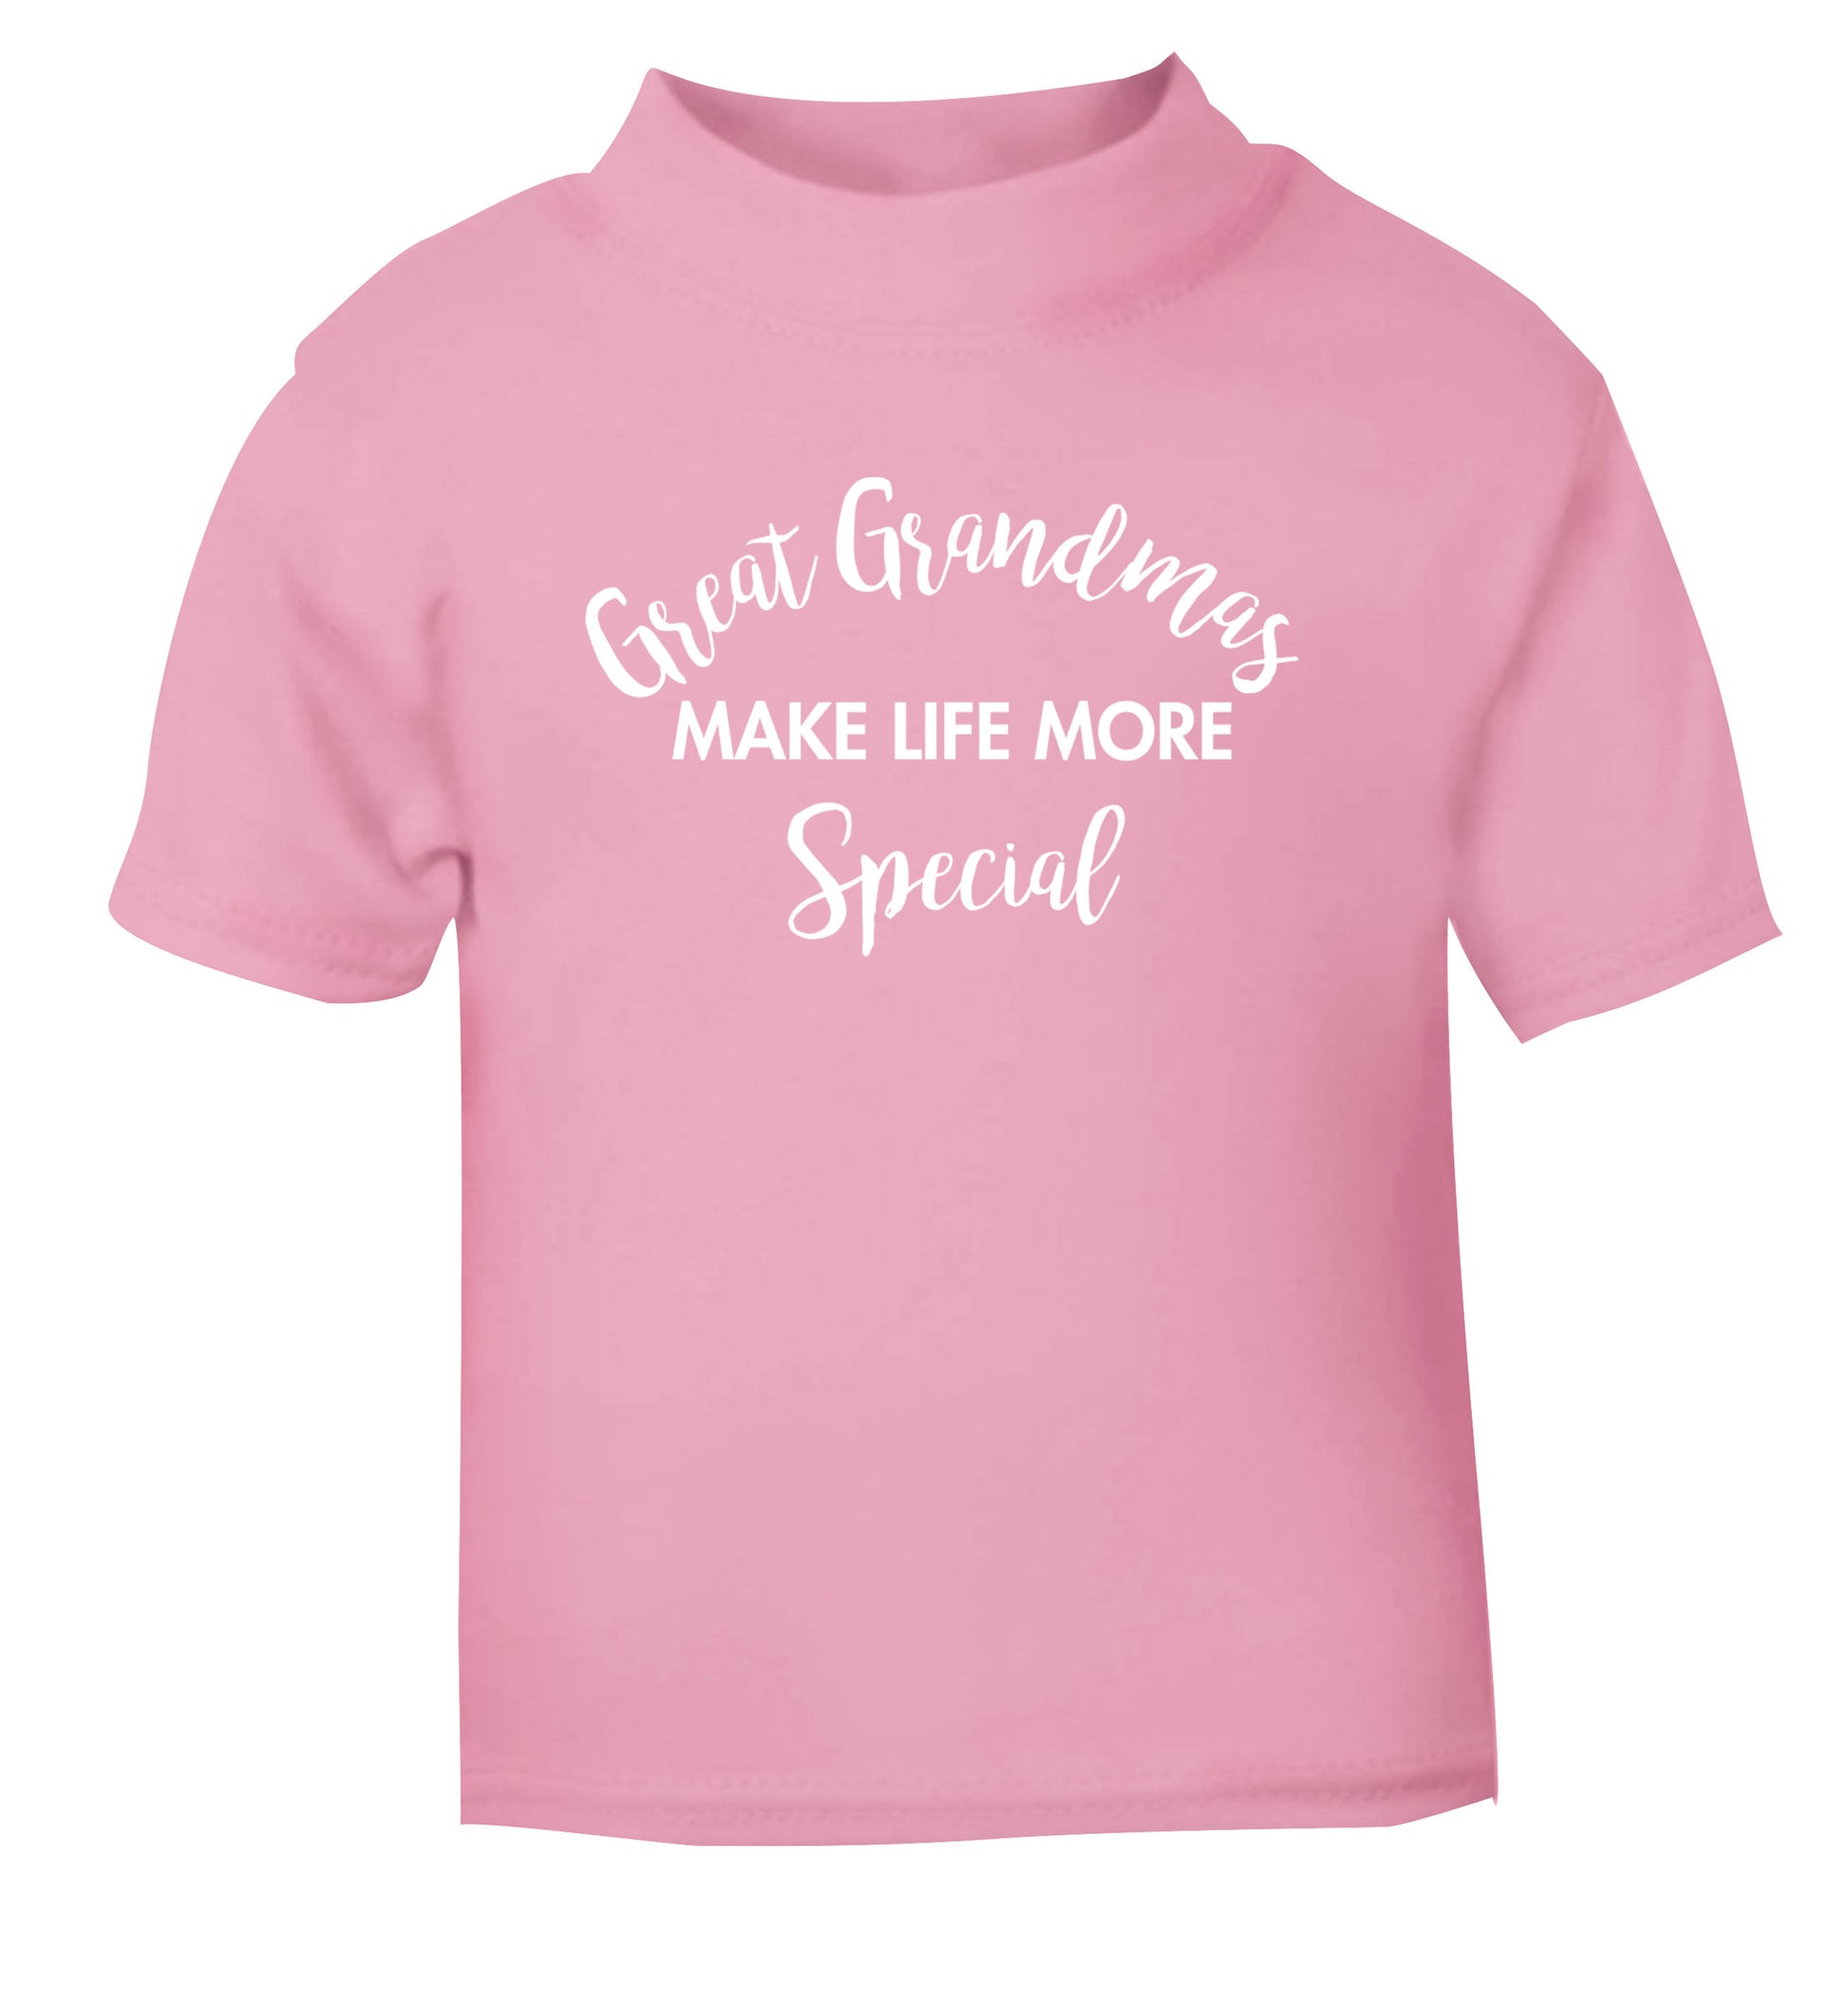 Great Grandmas make life more special light pink Baby Toddler Tshirt 2 Years